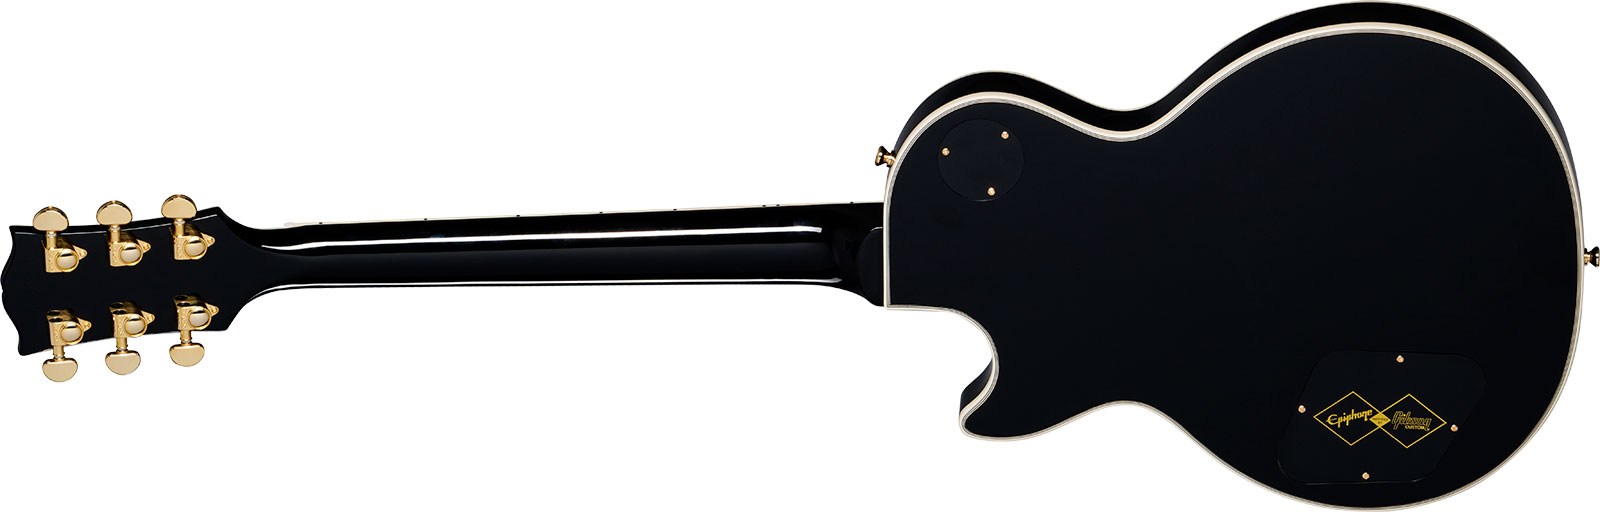 Epiphone Les Paul Custom Inspired By 2h Ht Eb - Ebony - Guitarra eléctrica de corte único. - Variation 1